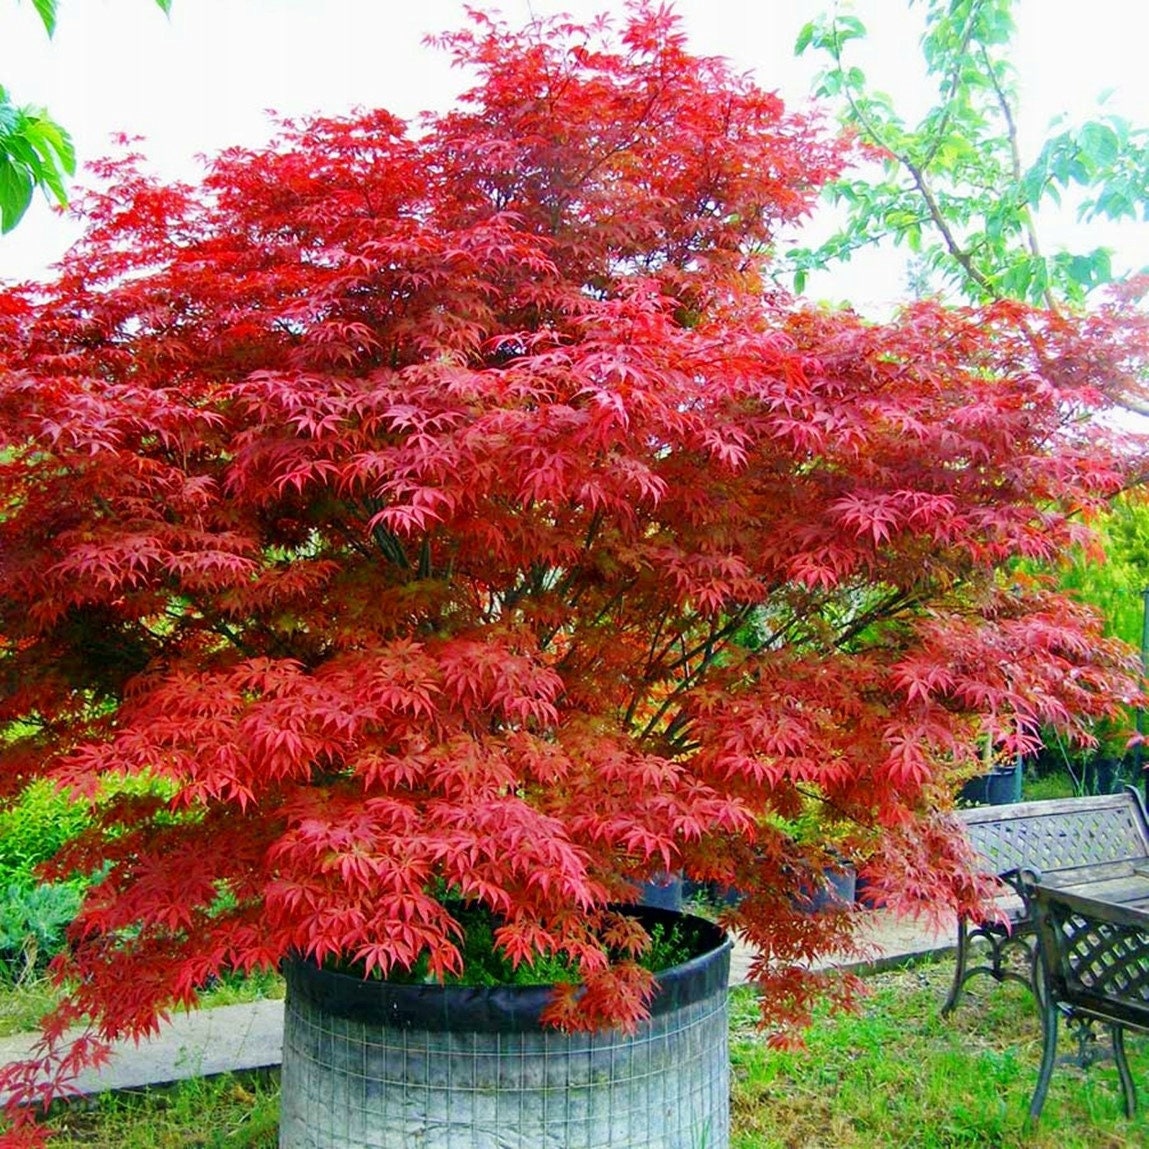 Red Japanese Maple - Red Leafs - Red Dissected Japanese Maple - Acer Palmatum var. Atropurpureum - 10 Seeds Vesta Market